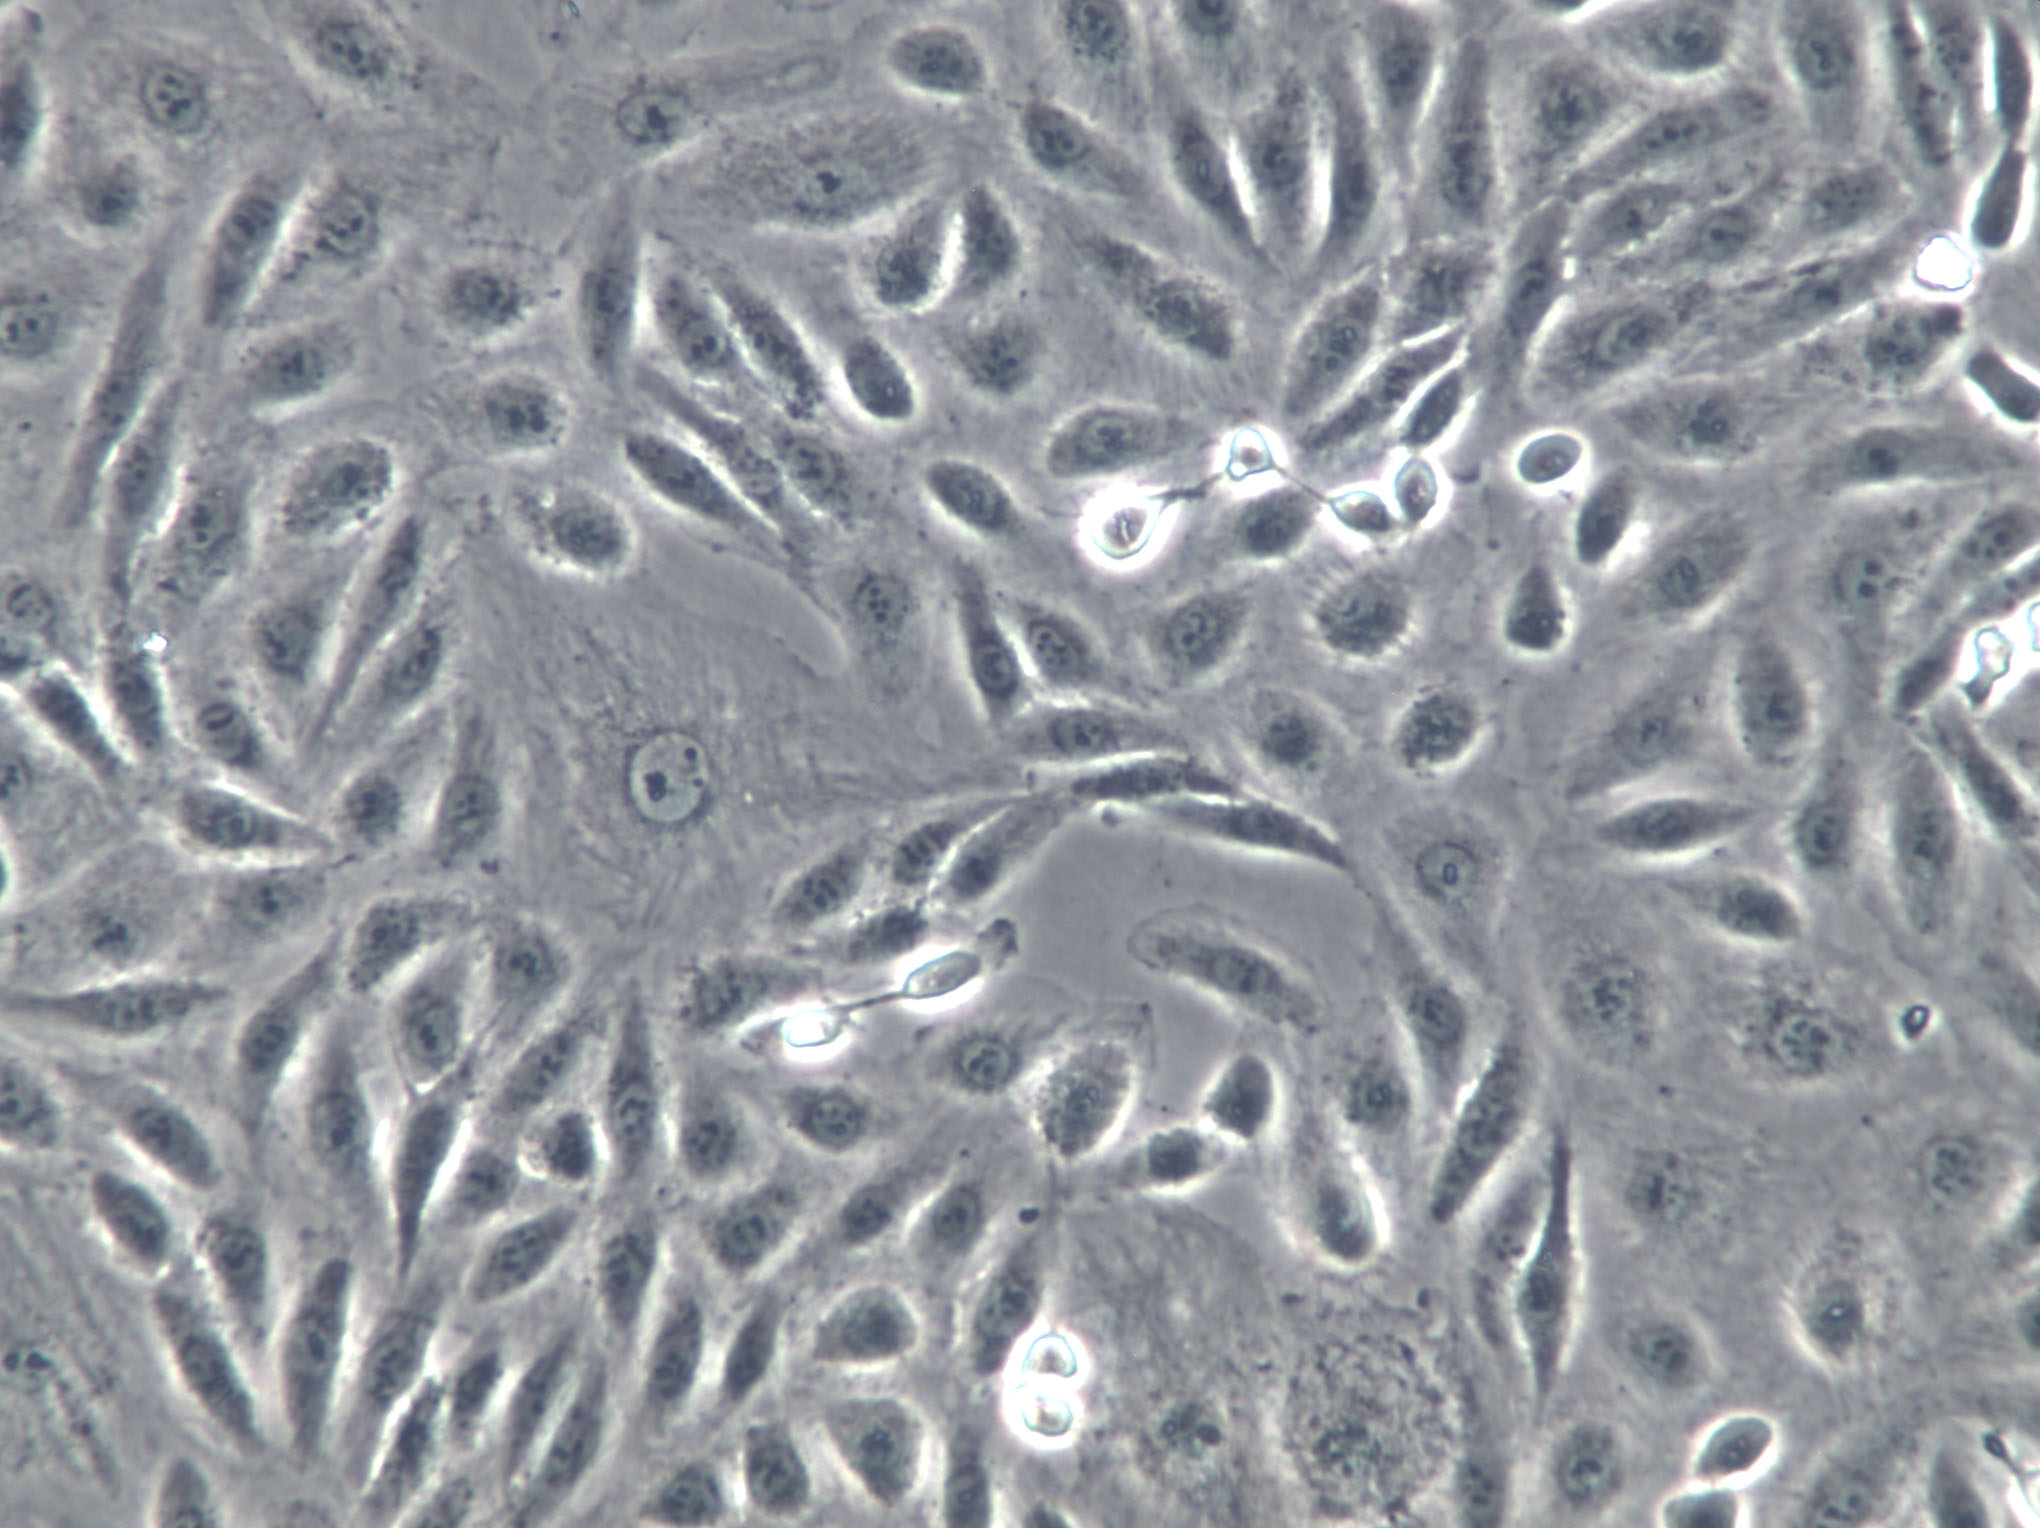 Ca759 Cell|小鼠乳腺癌细胞,Ca759 Cell